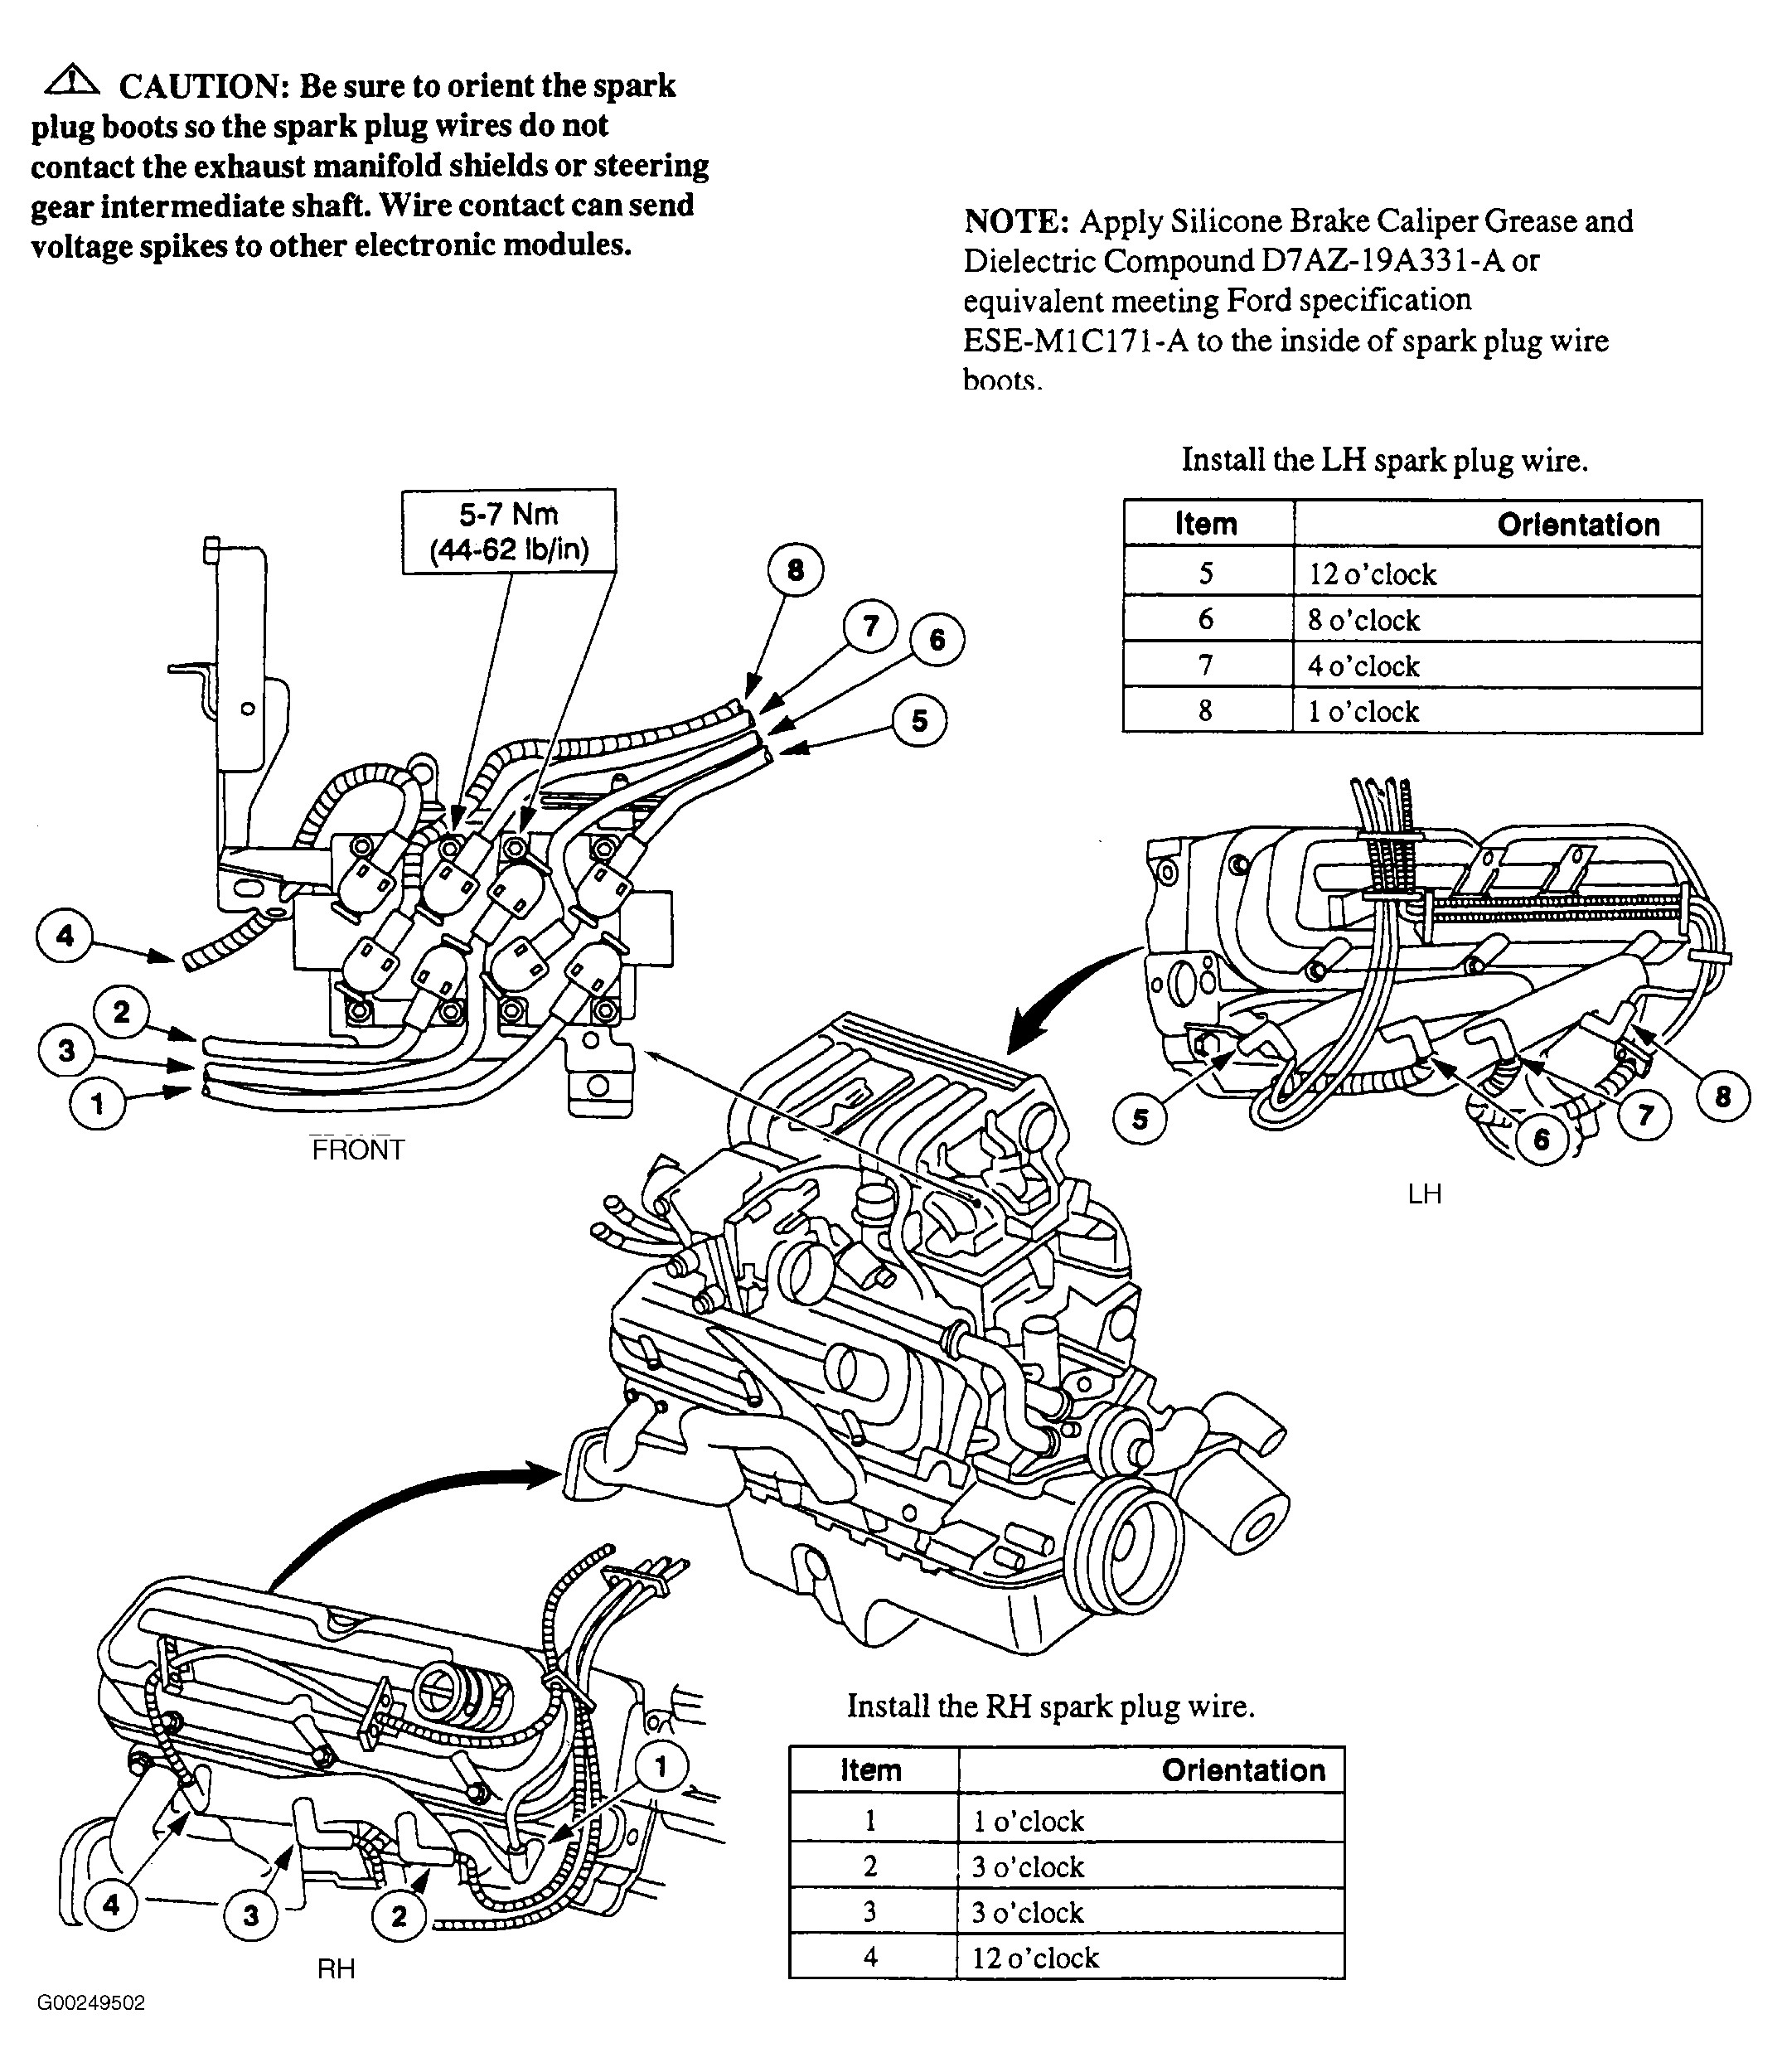 Ford Ranger 4 0 Engine Diagram 1997 ford Ranger 4 0 Spark Plug Wiring Diagram original Wire Of Ford Ranger 4 0 Engine Diagram